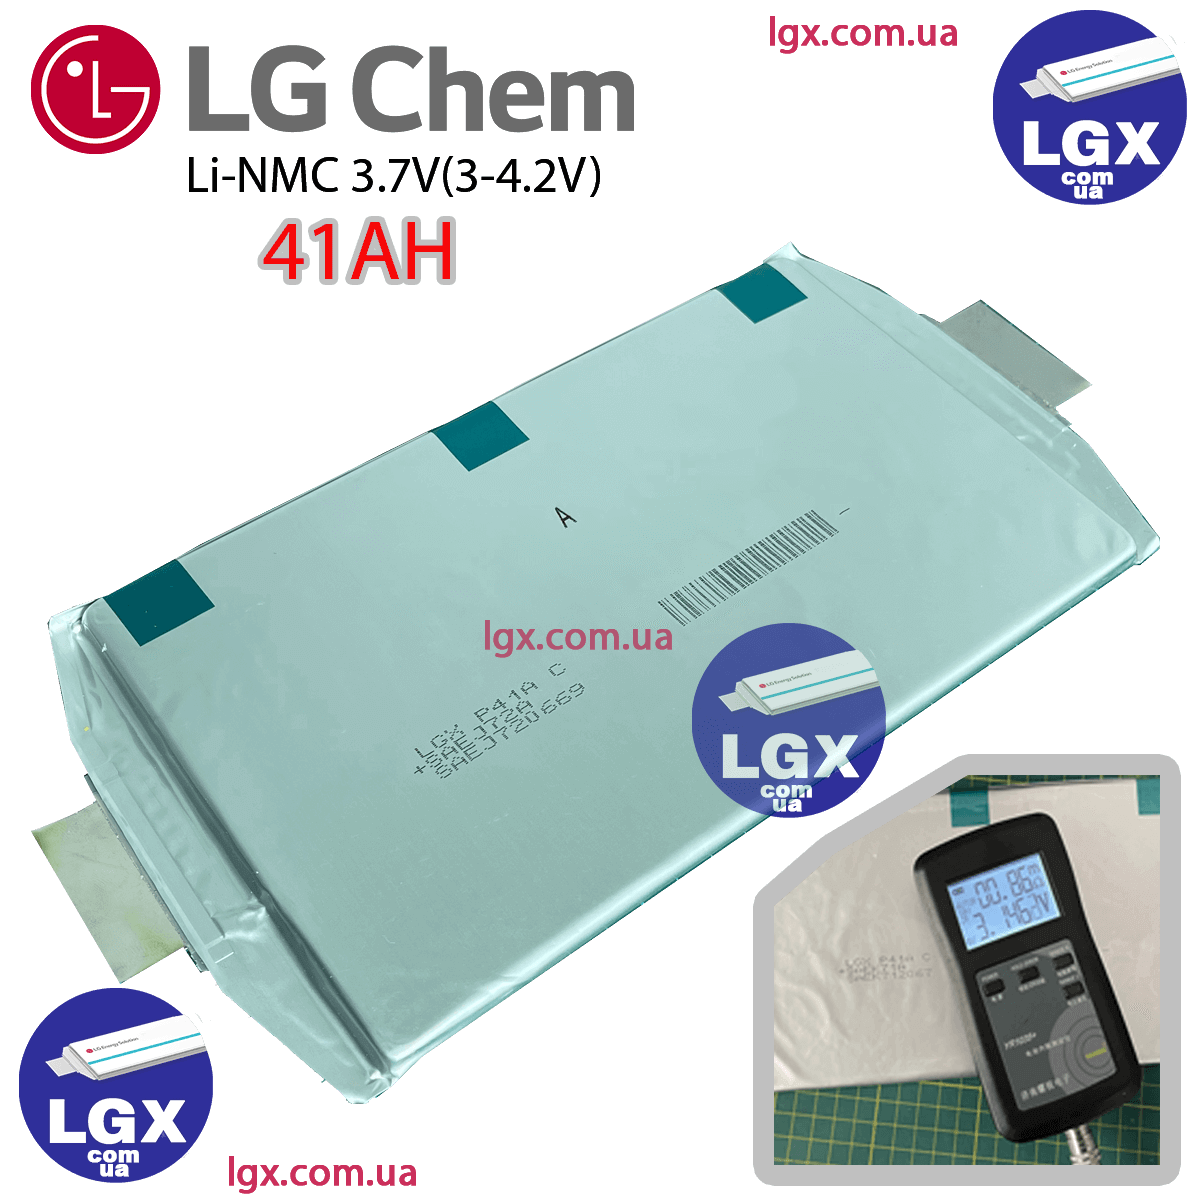 Аккумуляторный елемент LG-Chem LGX-e41 химия NMC 3.6v (пакет) емкость 41А/Ч разряд 3-5c 2000 циклов 650грам